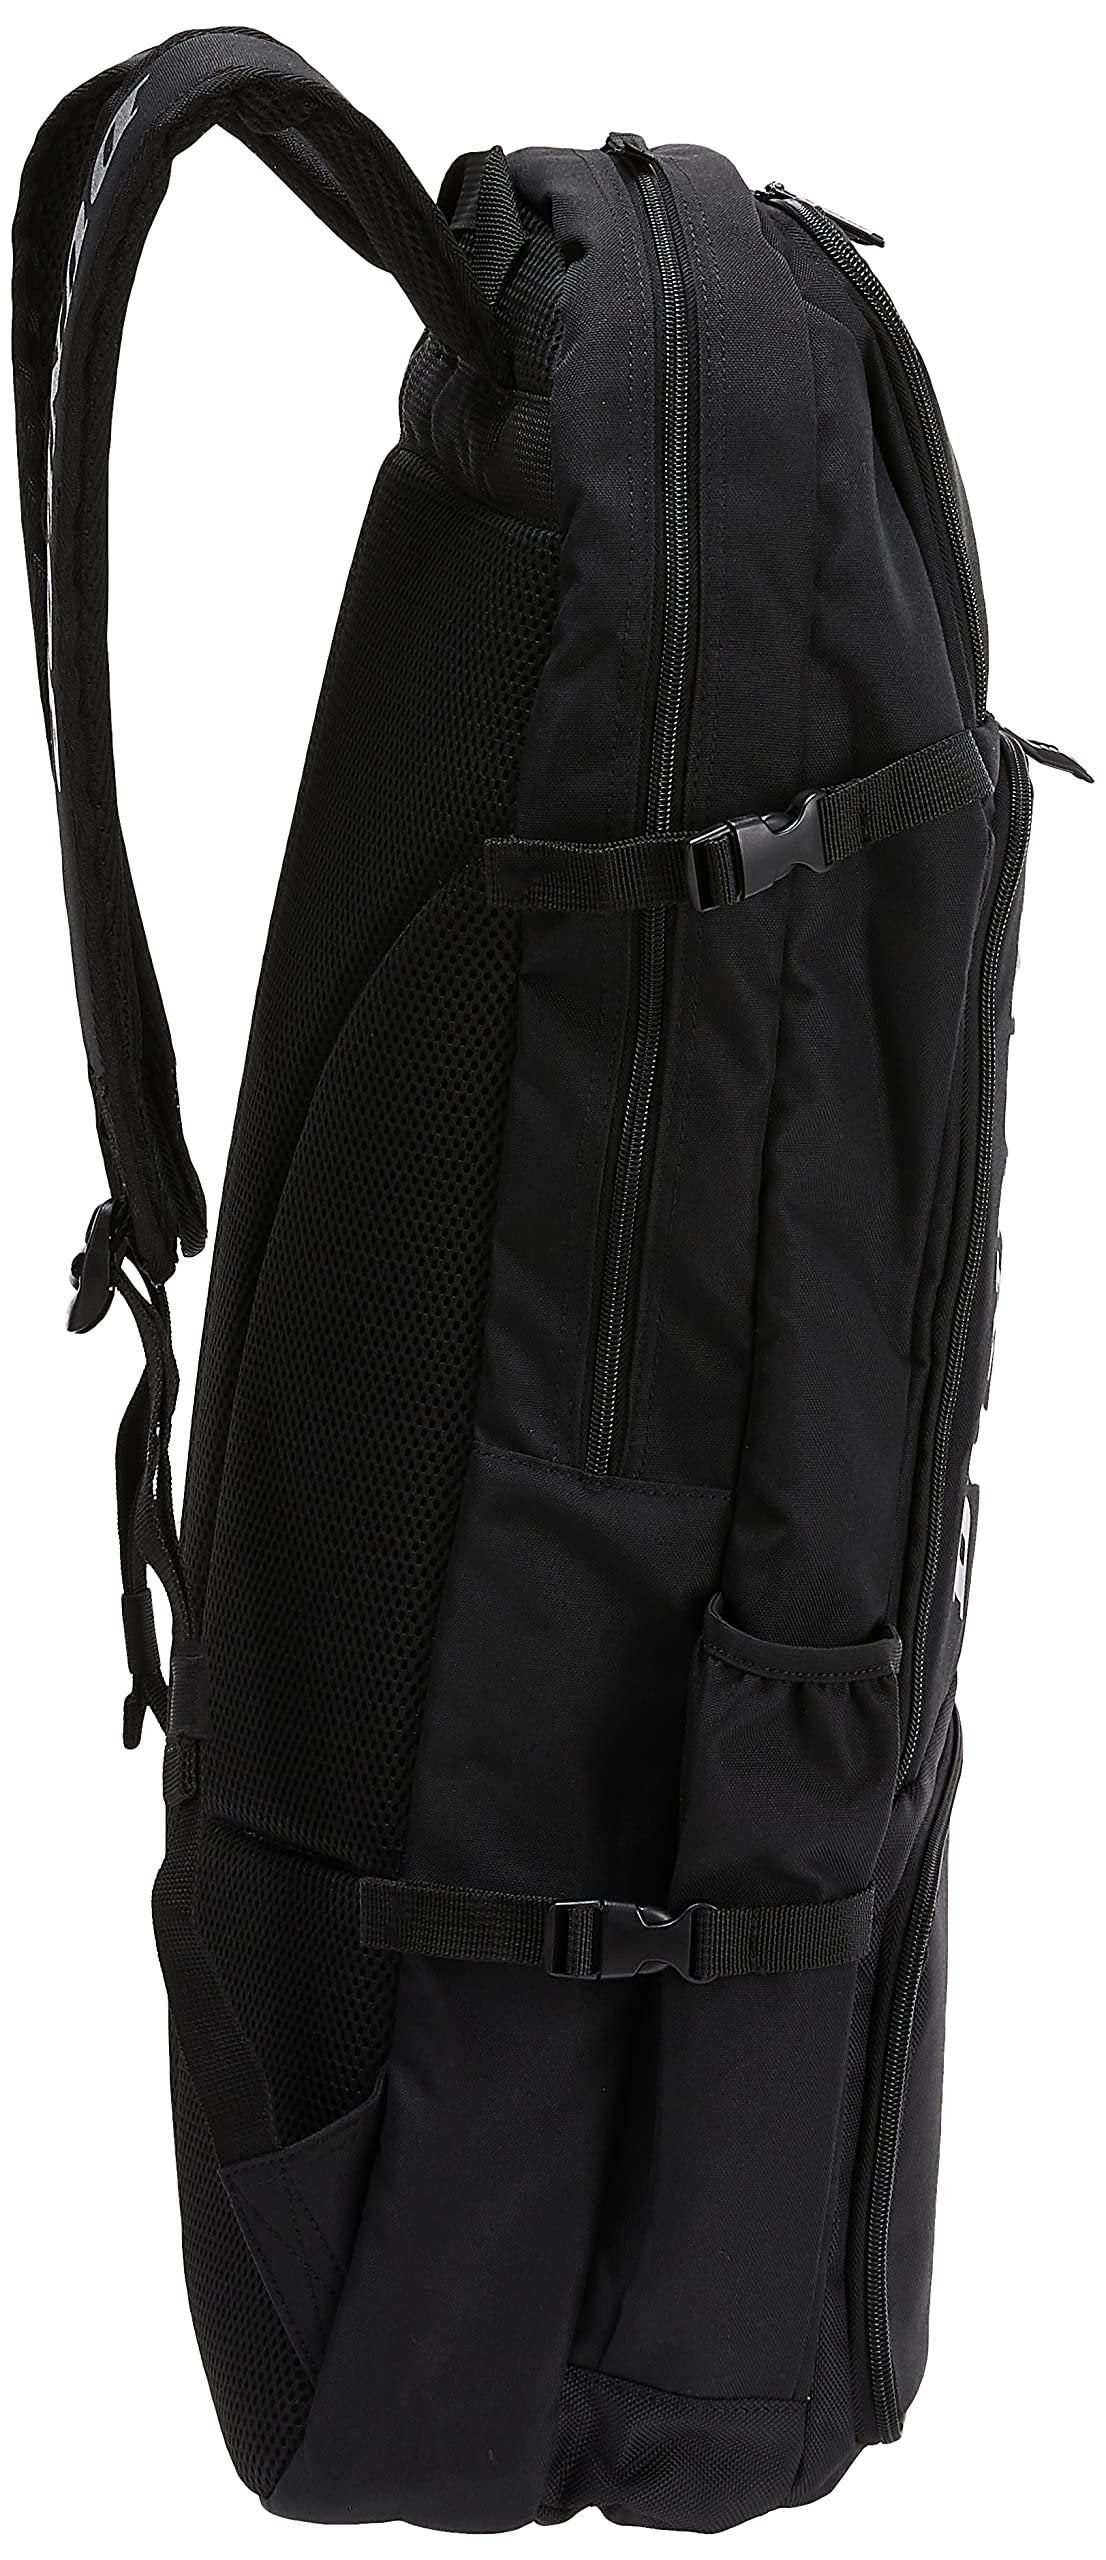 Dunlop 2021 CX Performance Long Backpack (Black/Black)